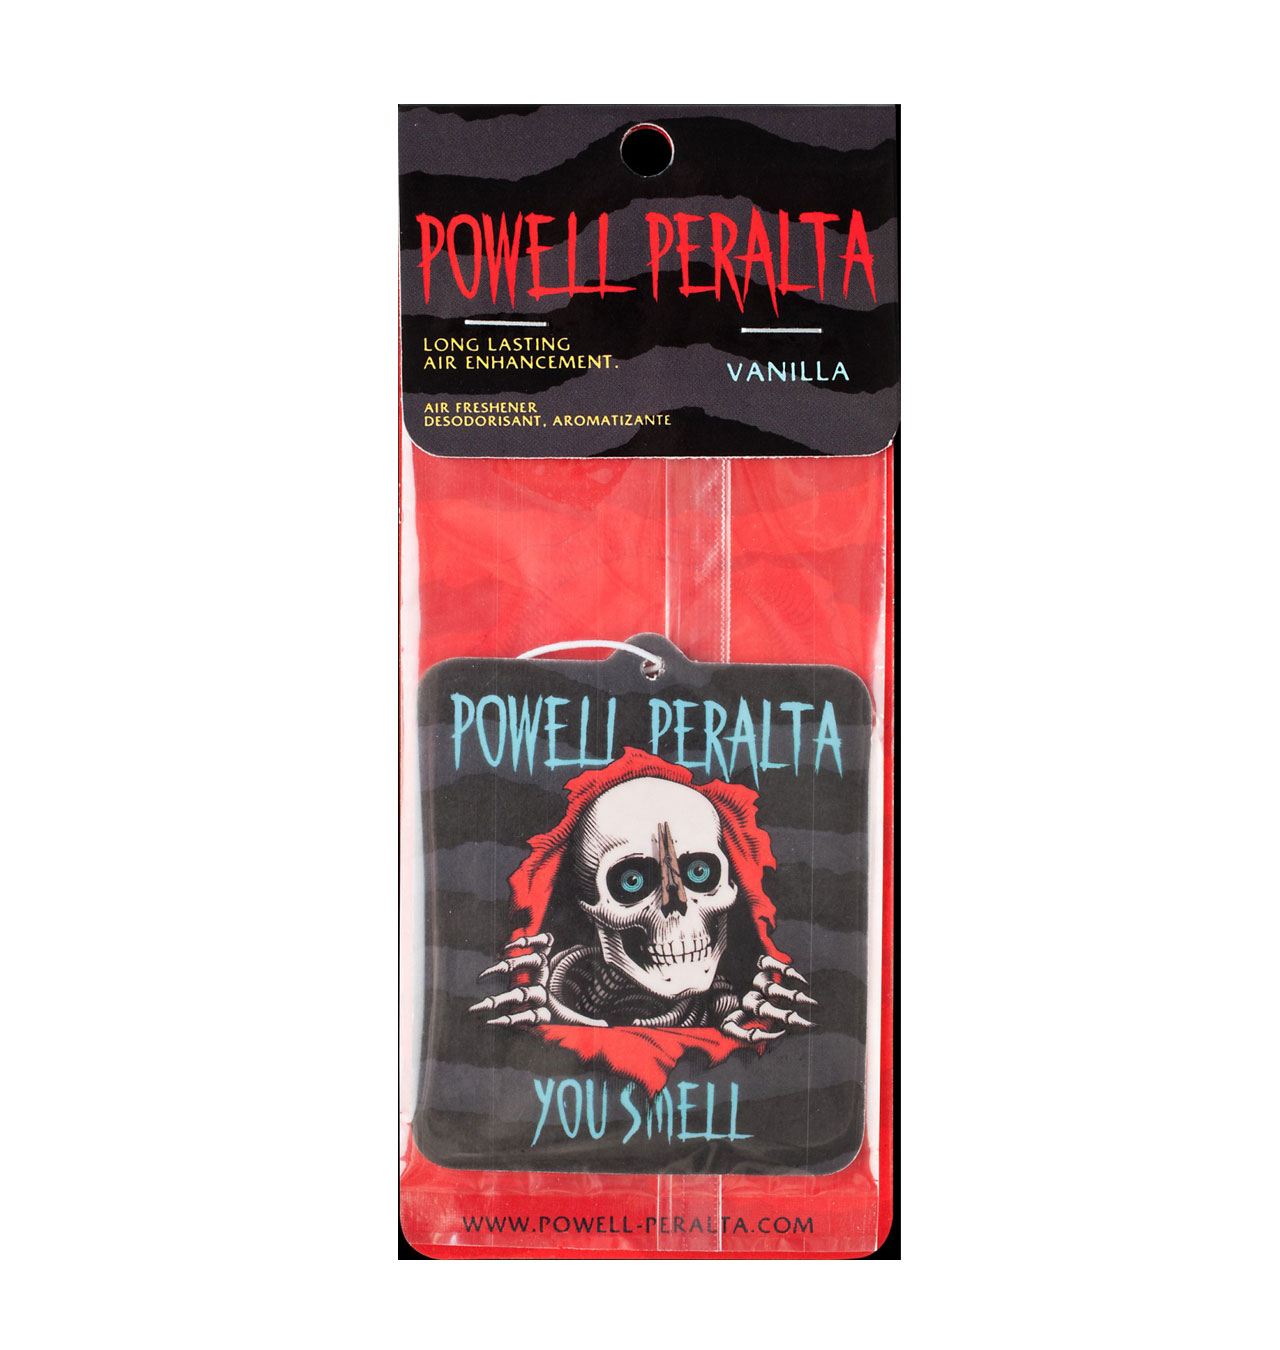 Powell Peralta - Air Freshener Ripper Vanilla